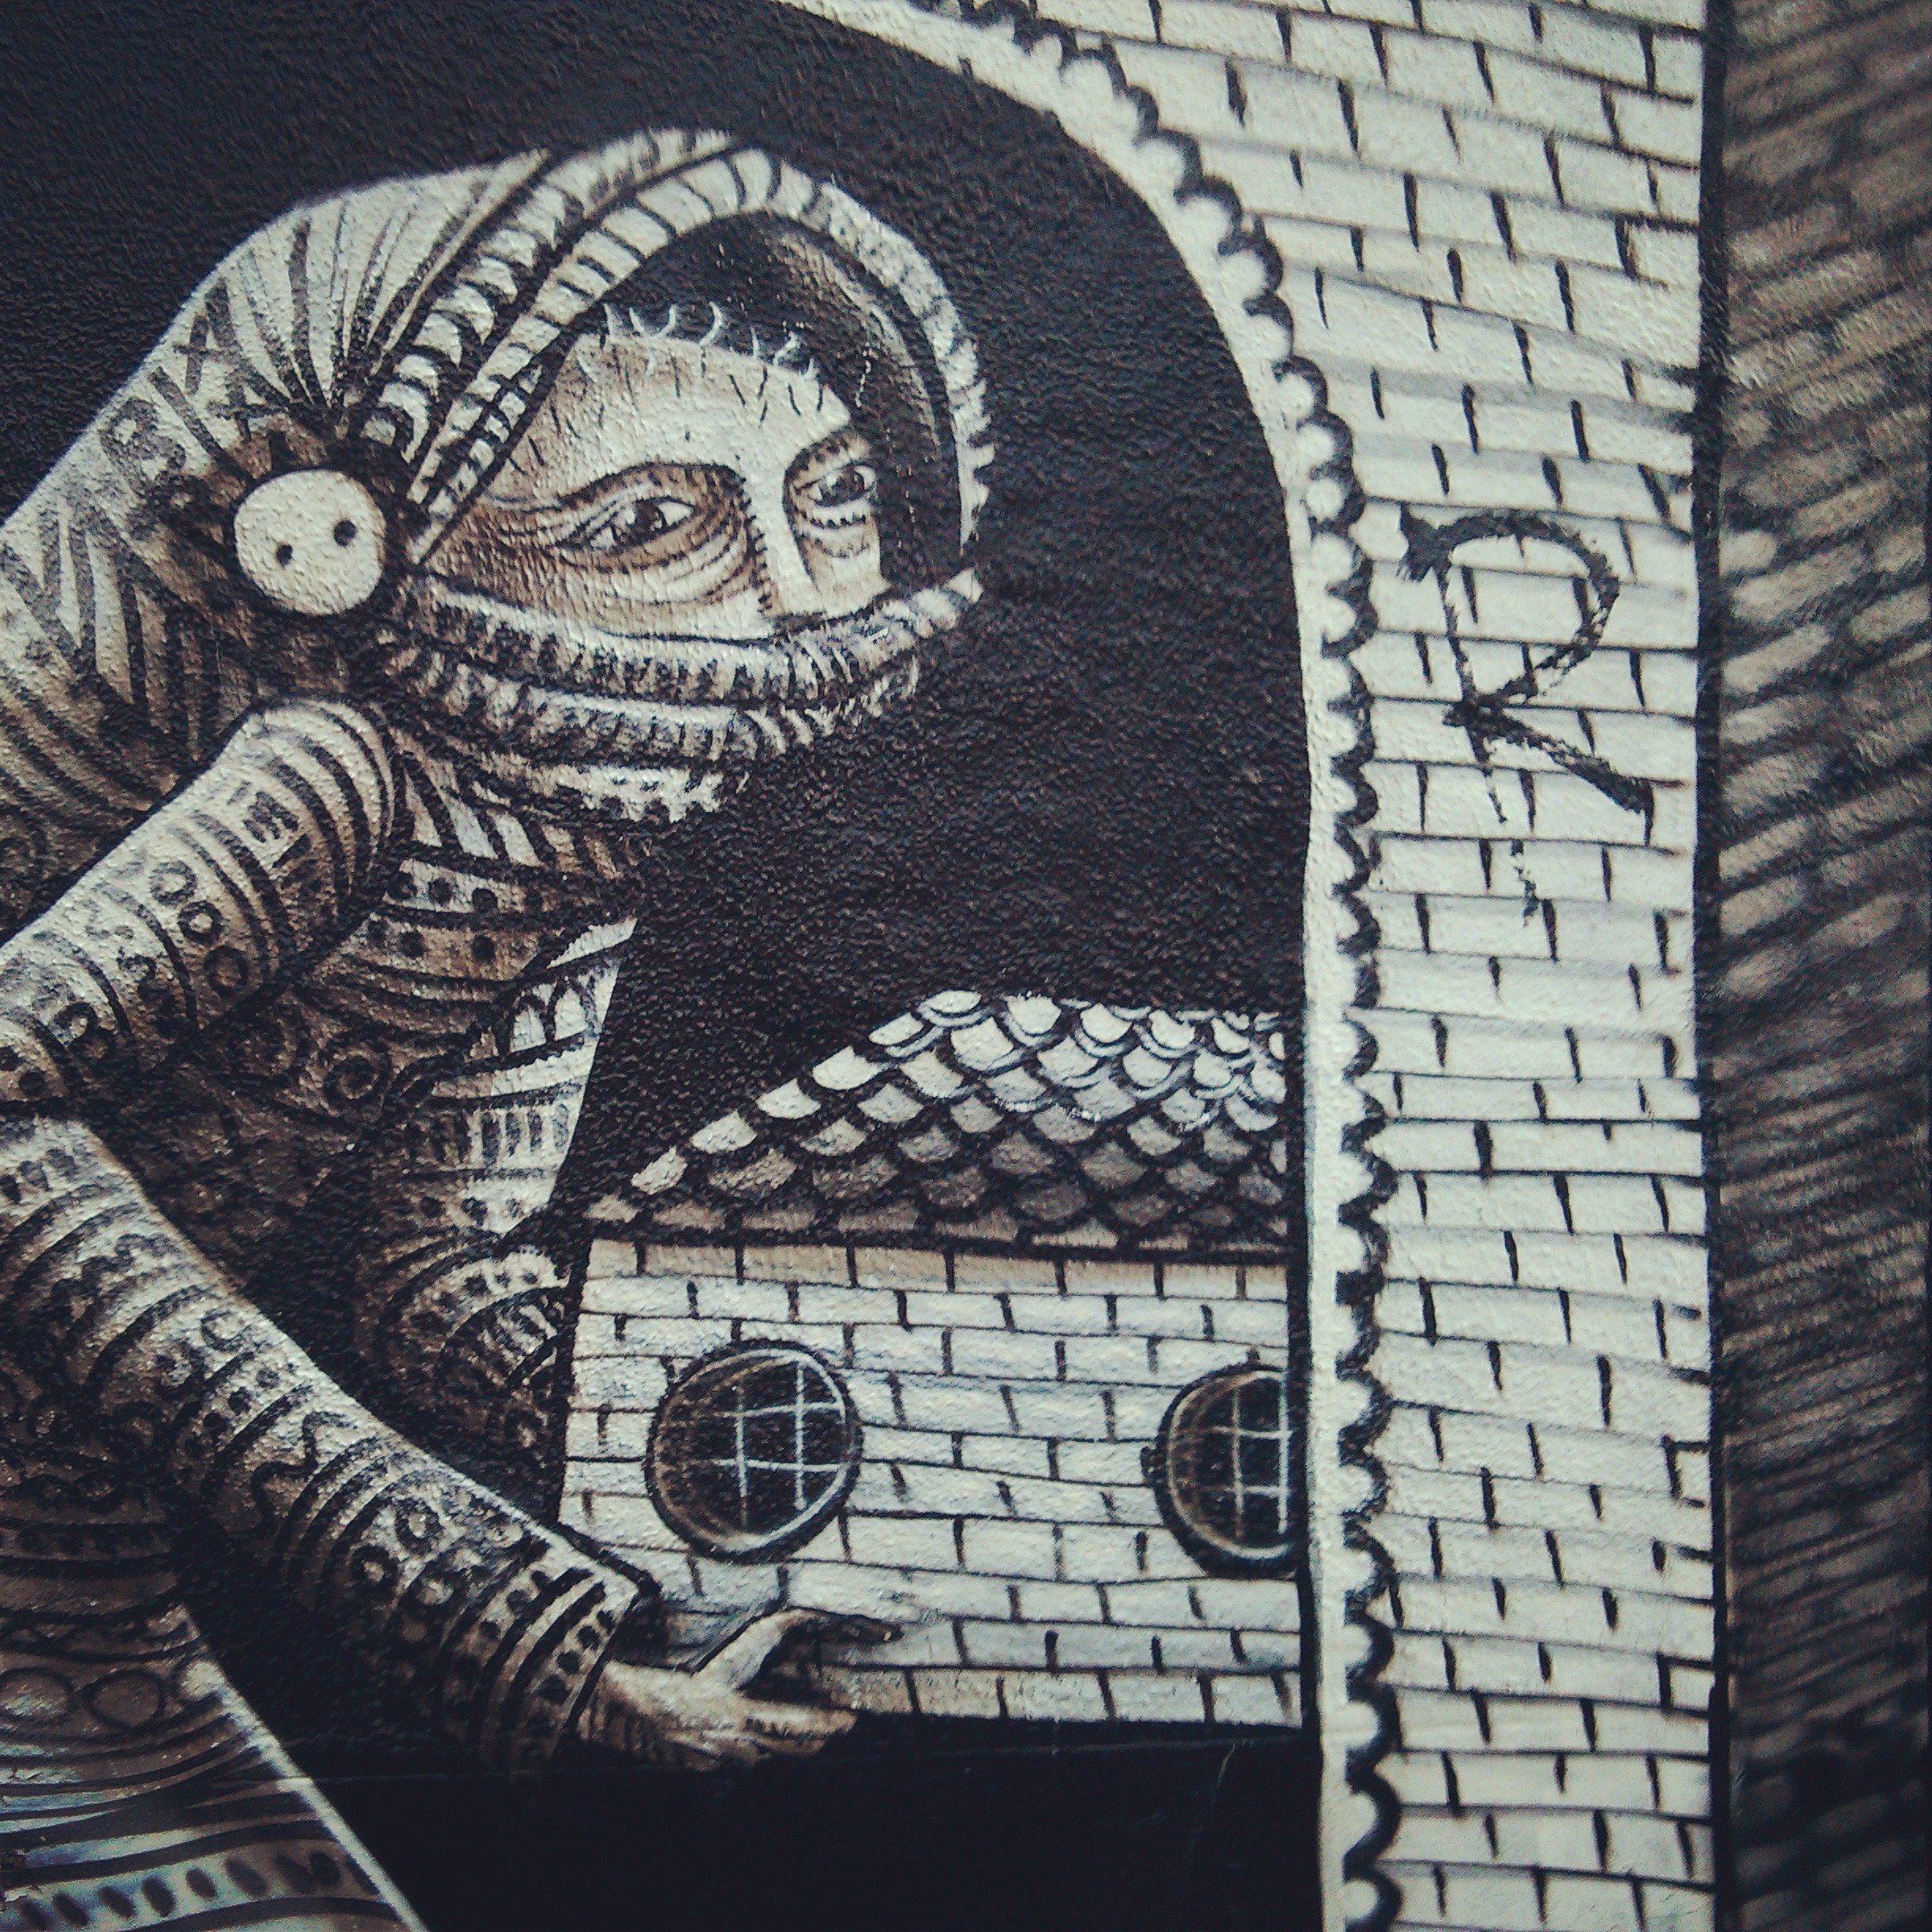 London street art 2014-2